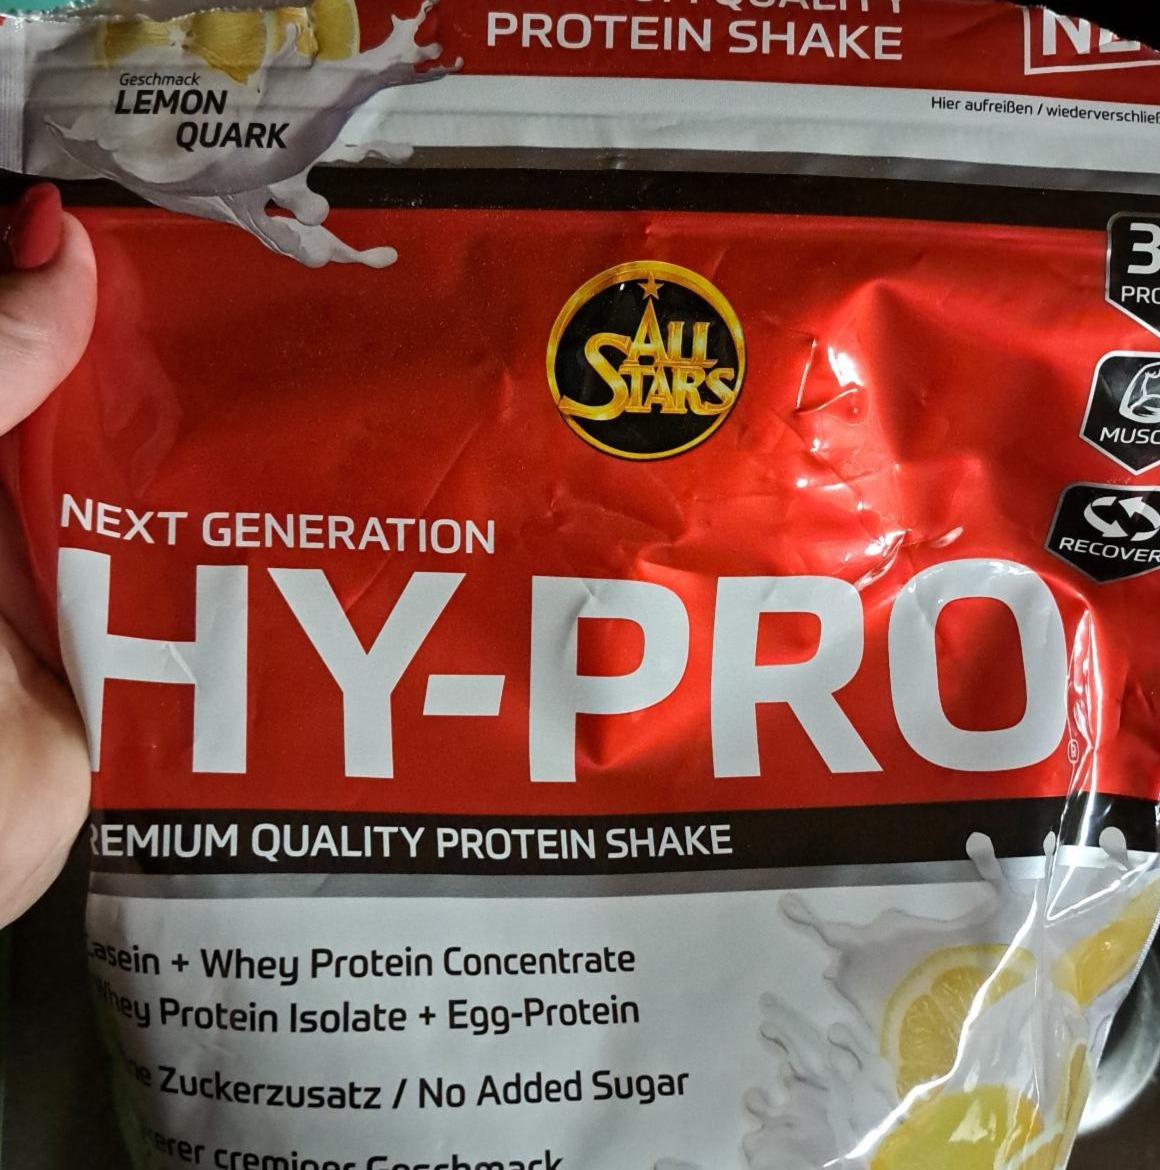 Fotografie - Hy-Pro Premium Quality Protein Shake Lemon Quark All Stars